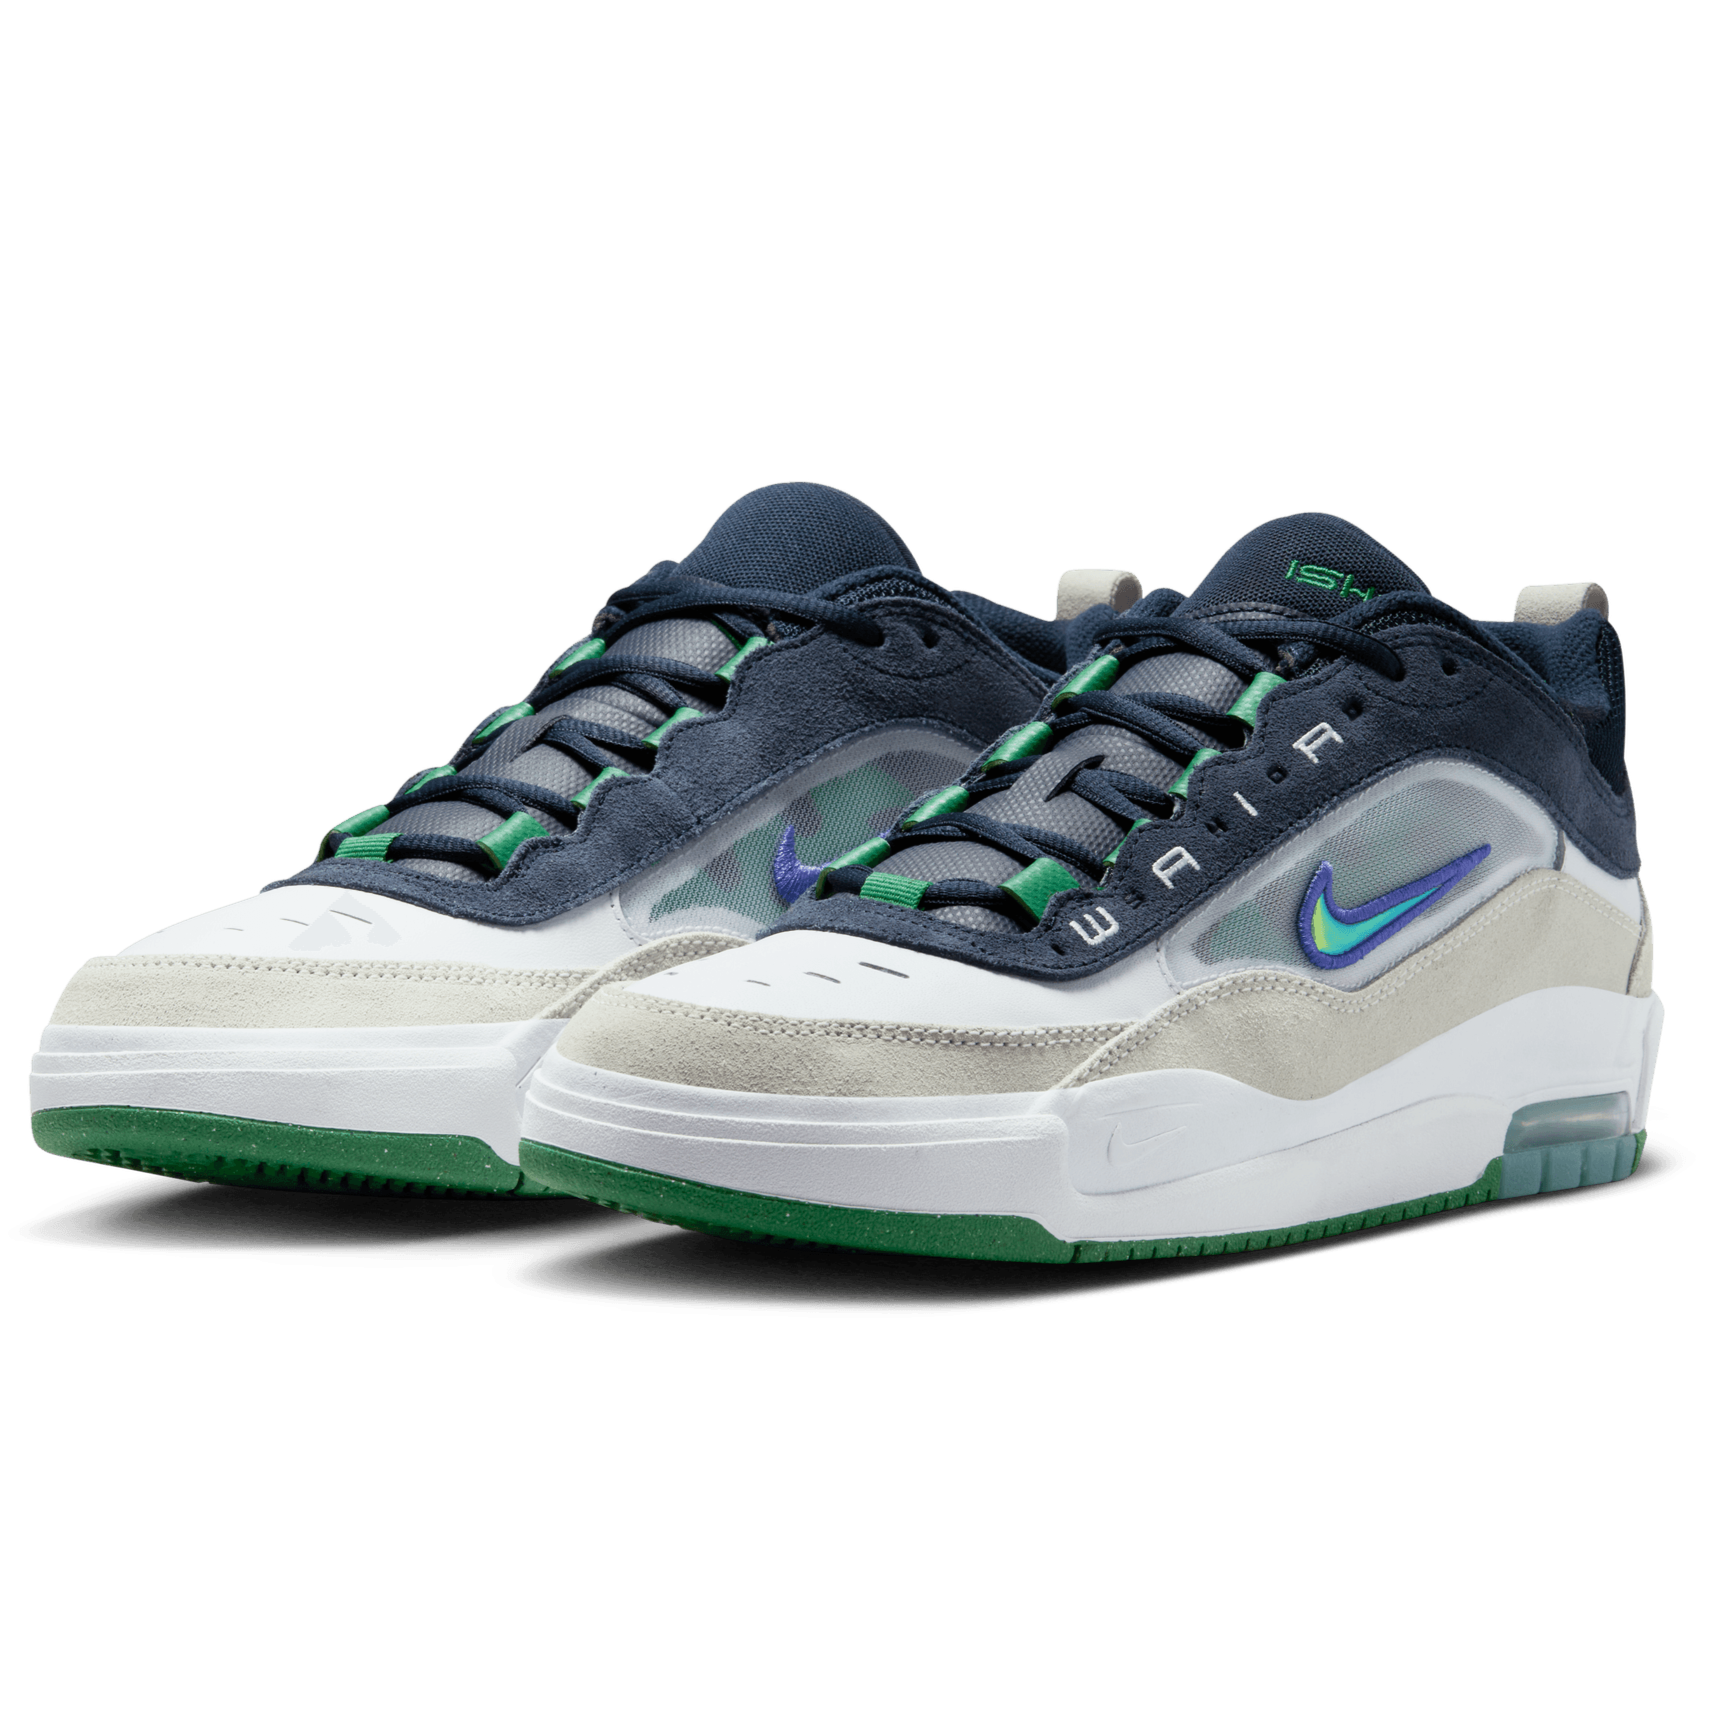 White/Obsidian Air Max Ishod Wair Nike SB Skate Shoe Front